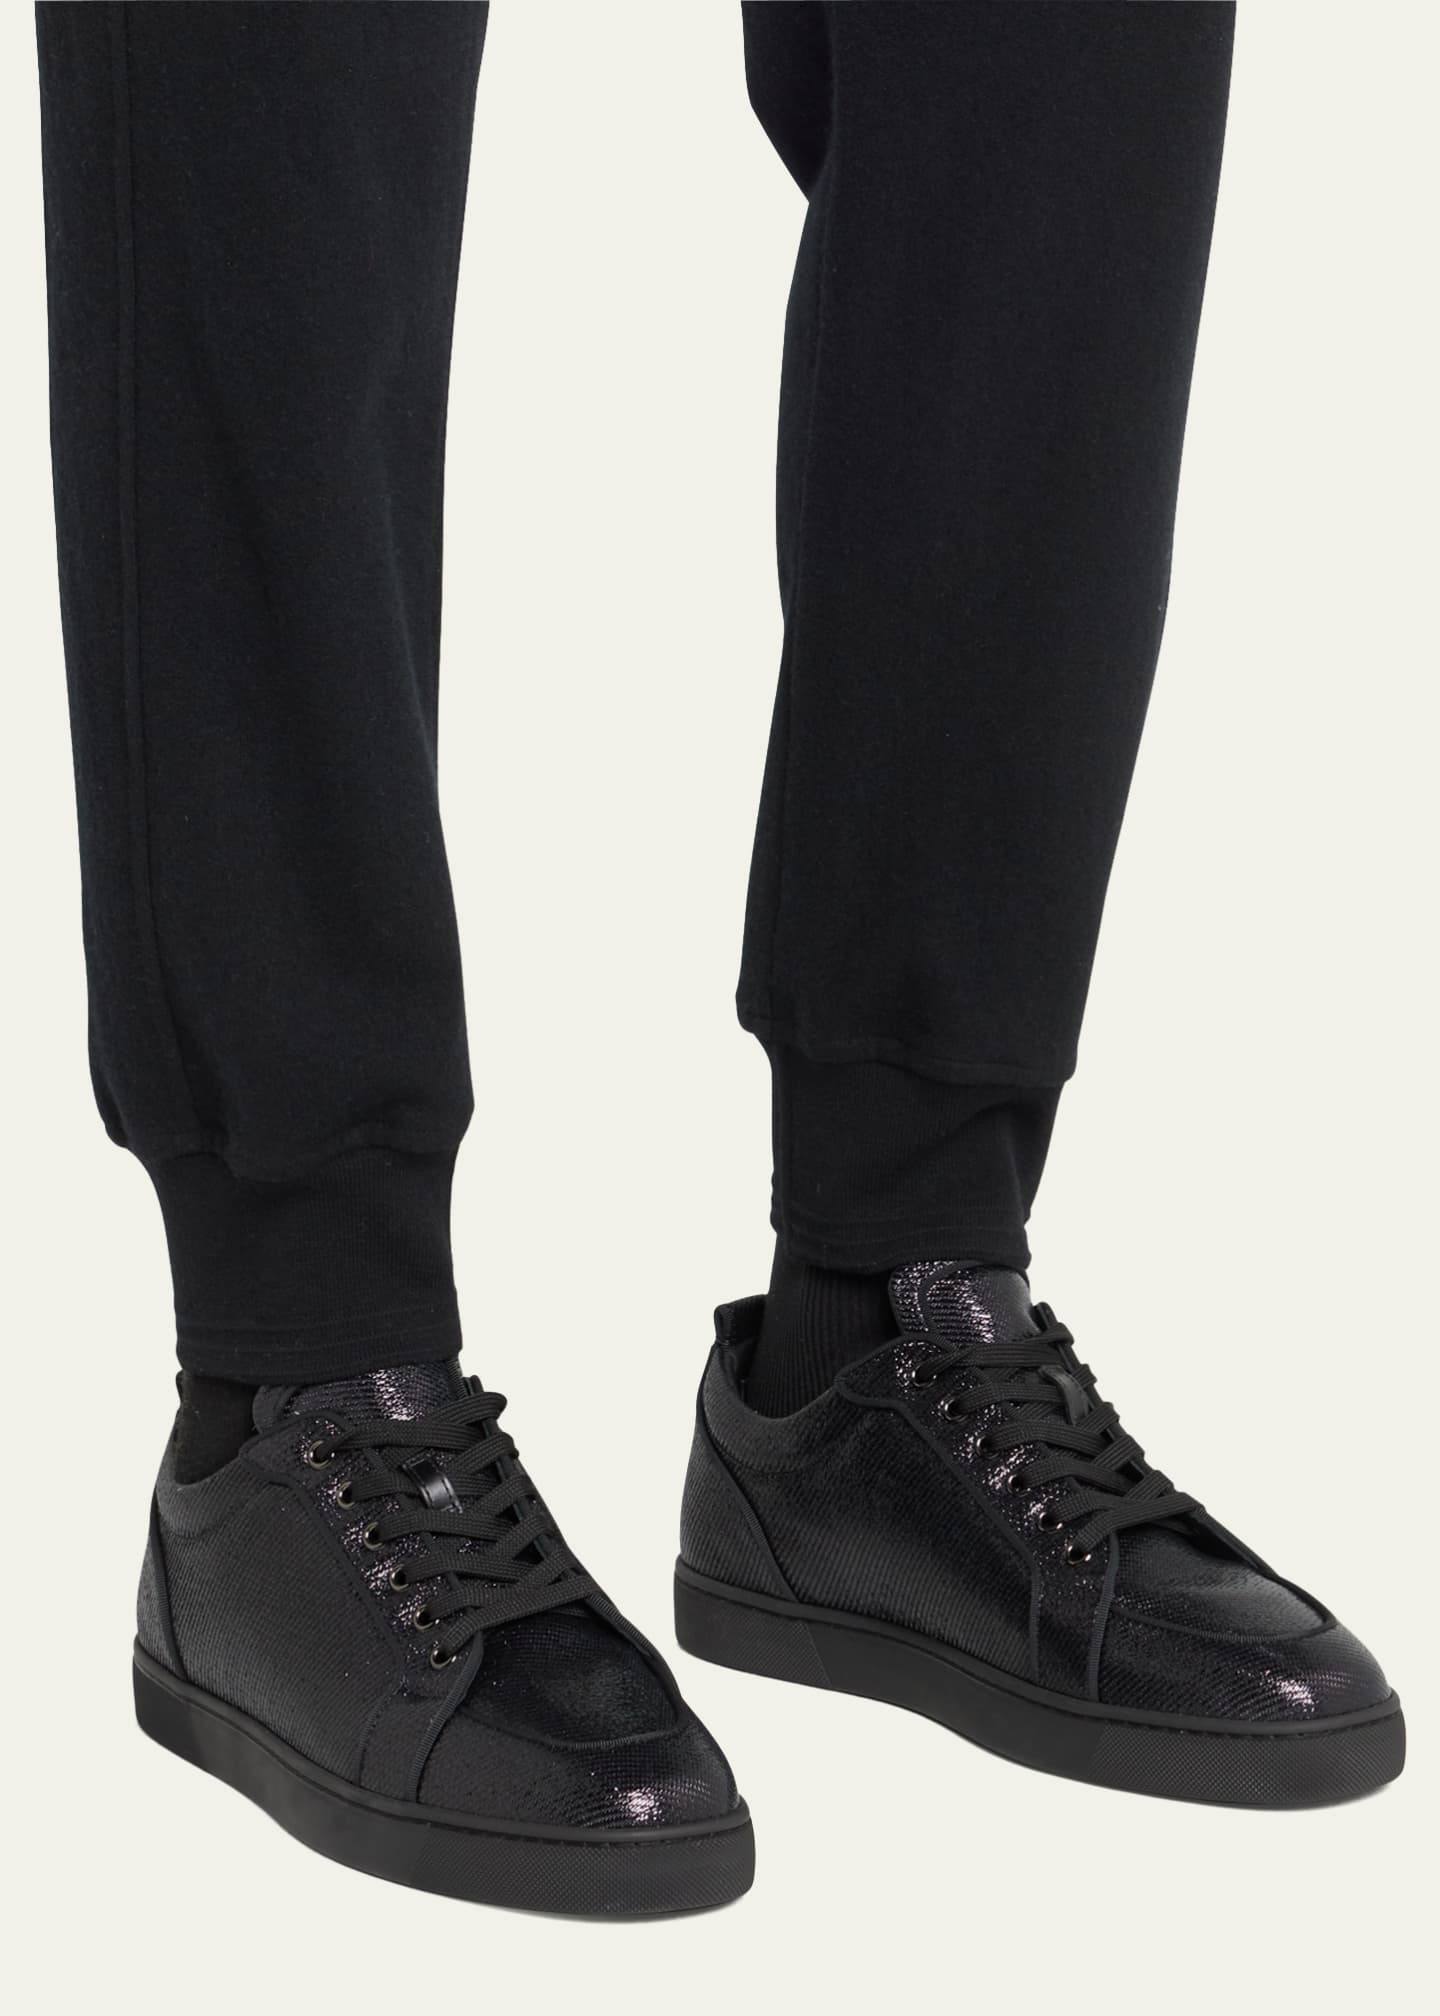 Christian Louboutin Rantulow Flat Leather Sneakers - Black